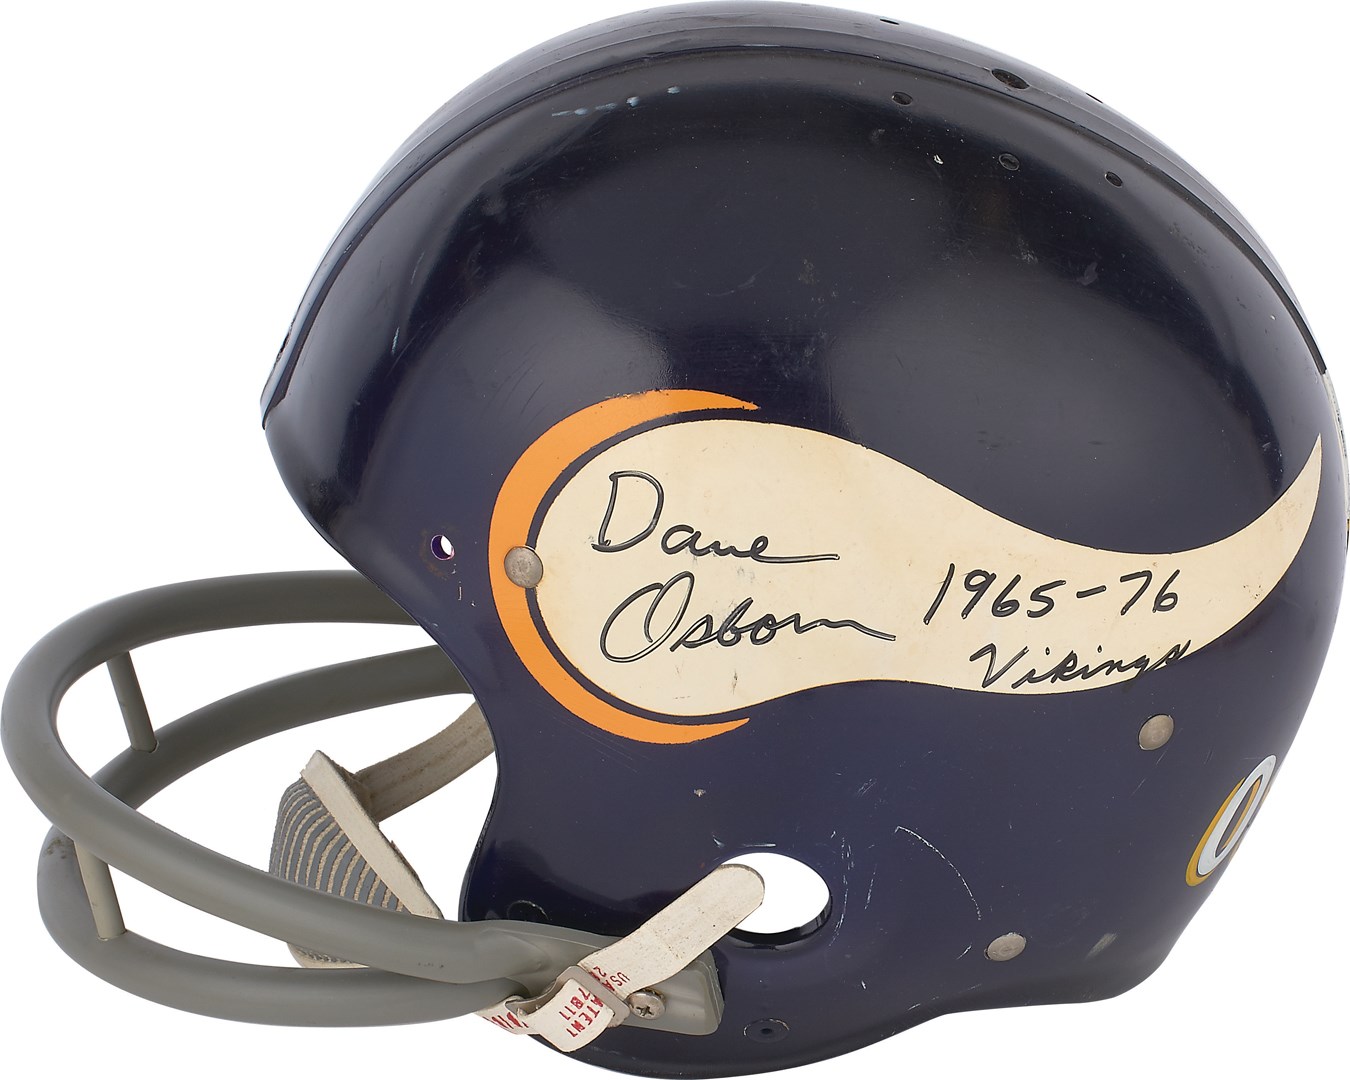 Football - Dave Osborn Minnesota Vikings Signed Game Worn Helmet (Osborn Letter)